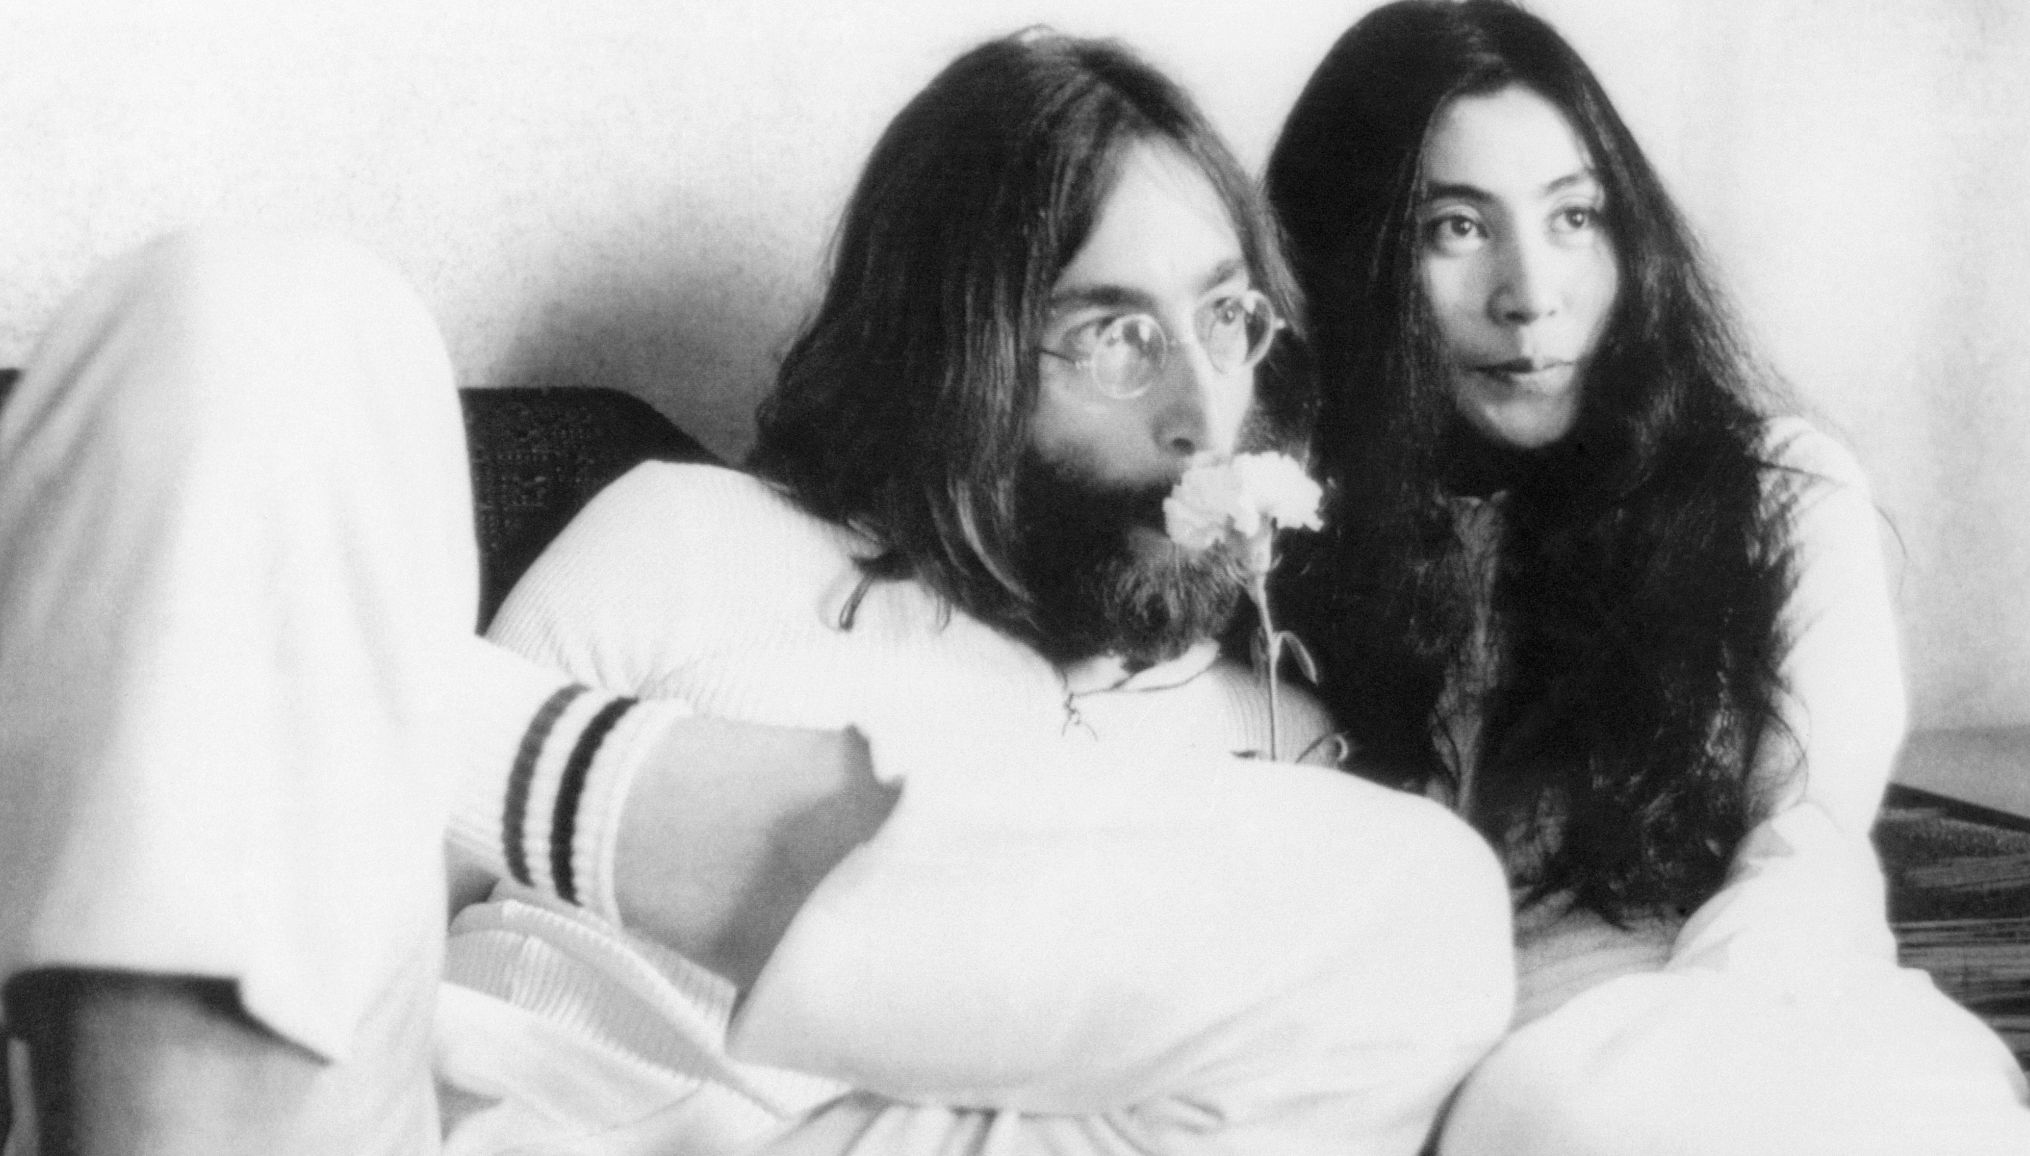 John Lennon sniffs a flower in bed with wife Yoko Ono